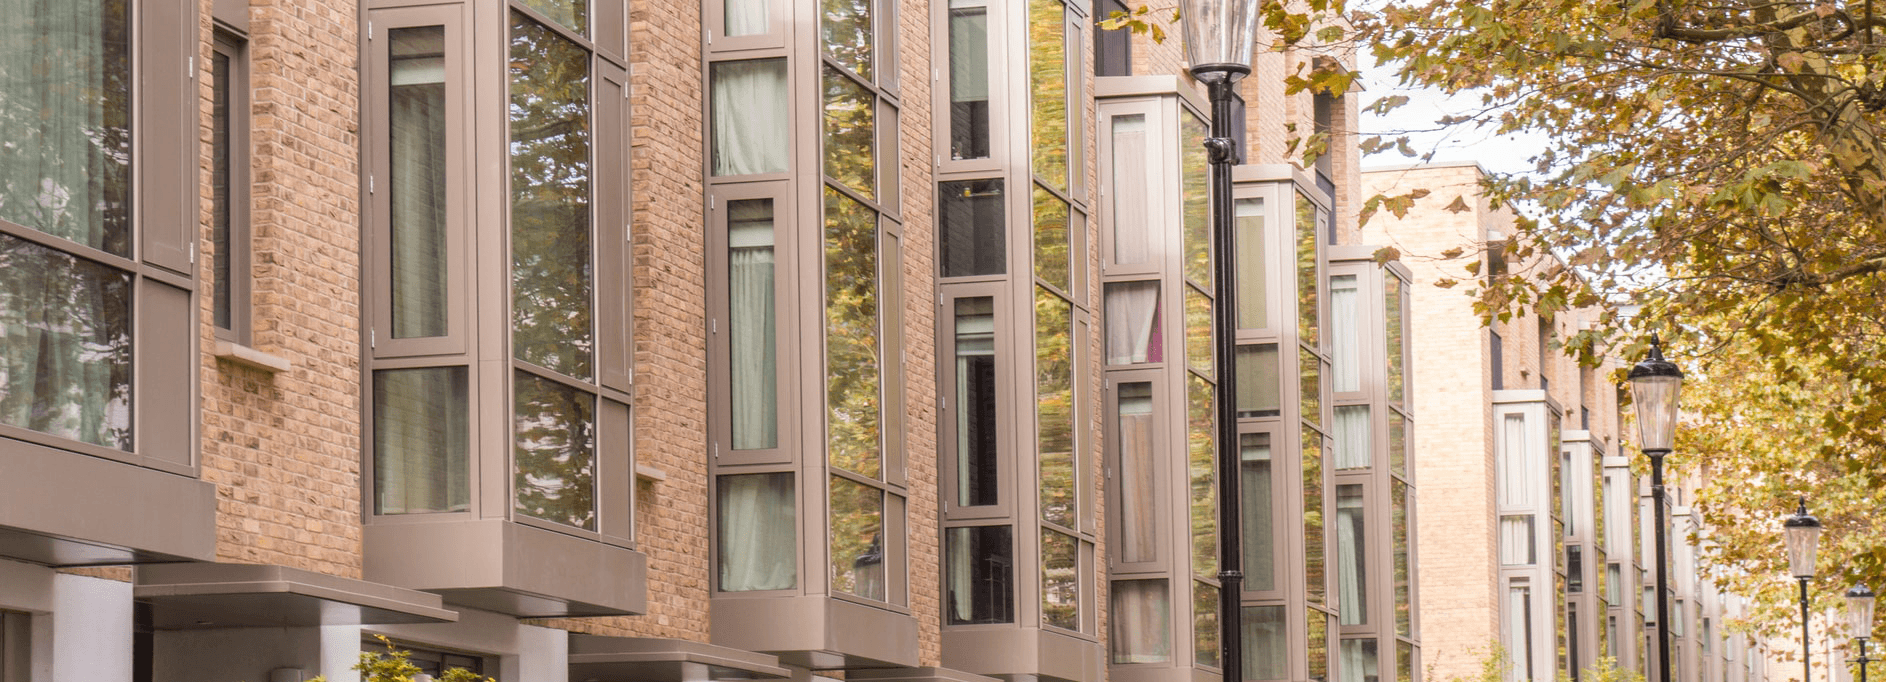 shot of a row of windows